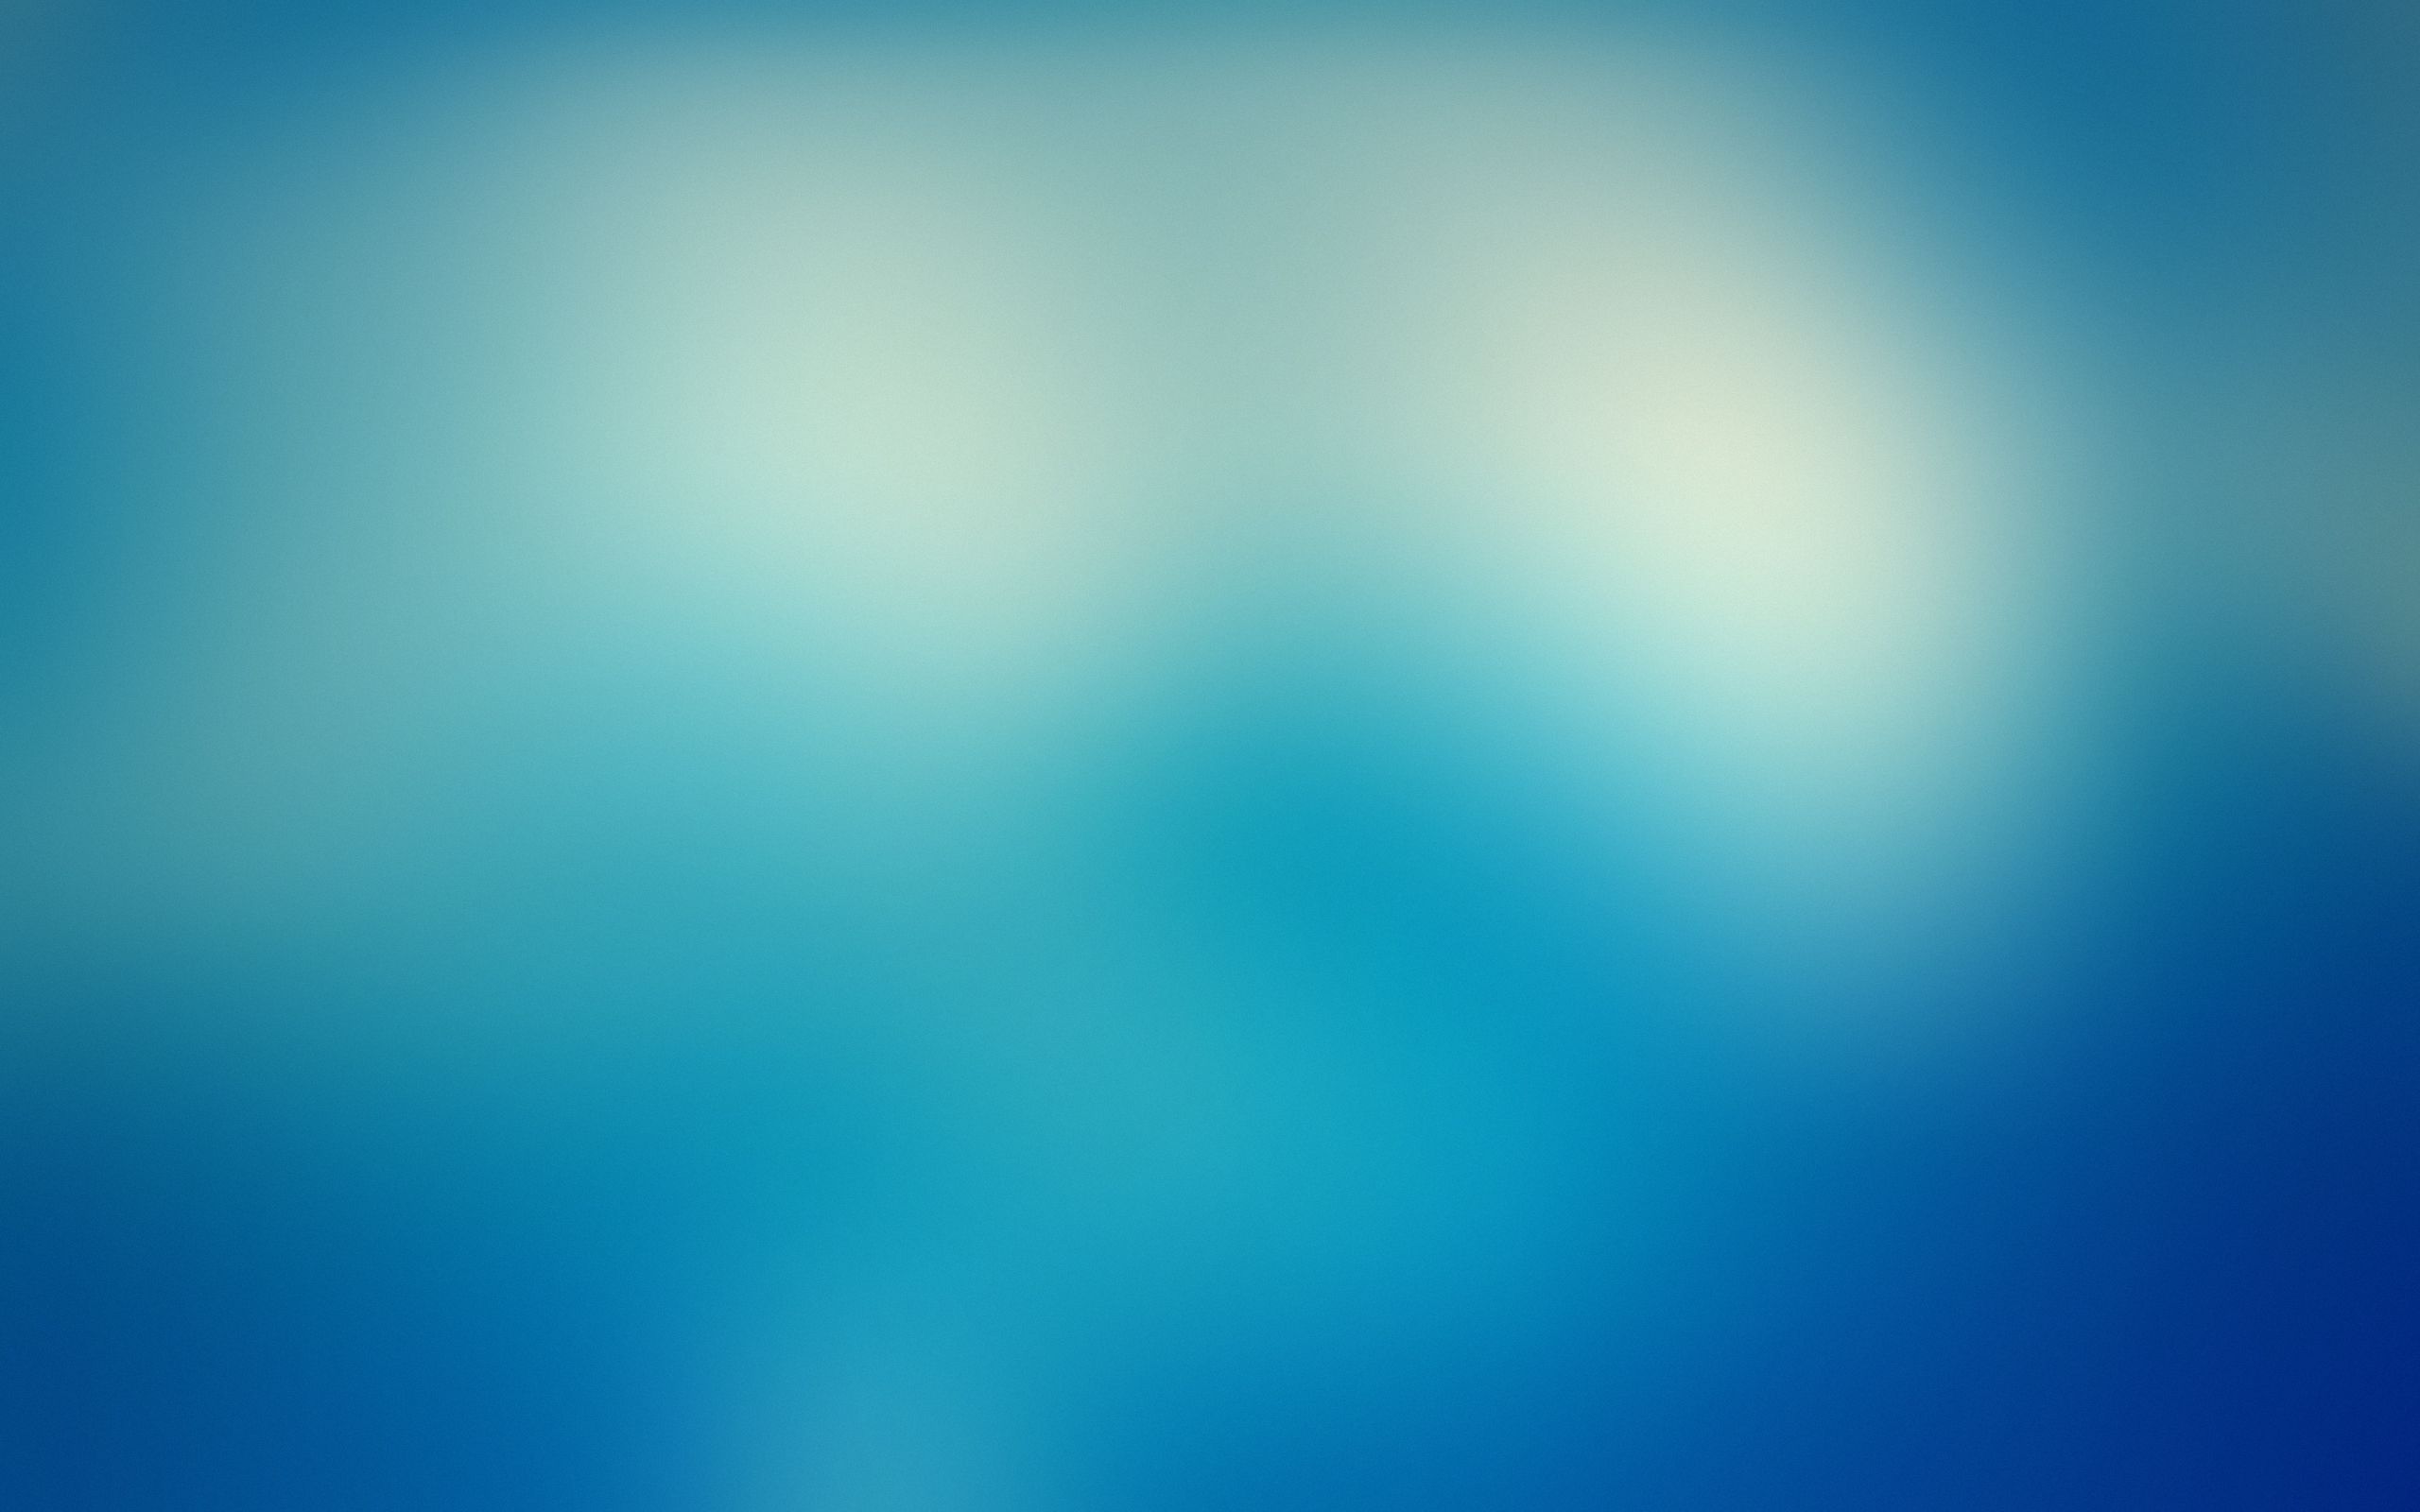 Blurry blue light wallpaper. Free background image, Blue background image, Background image